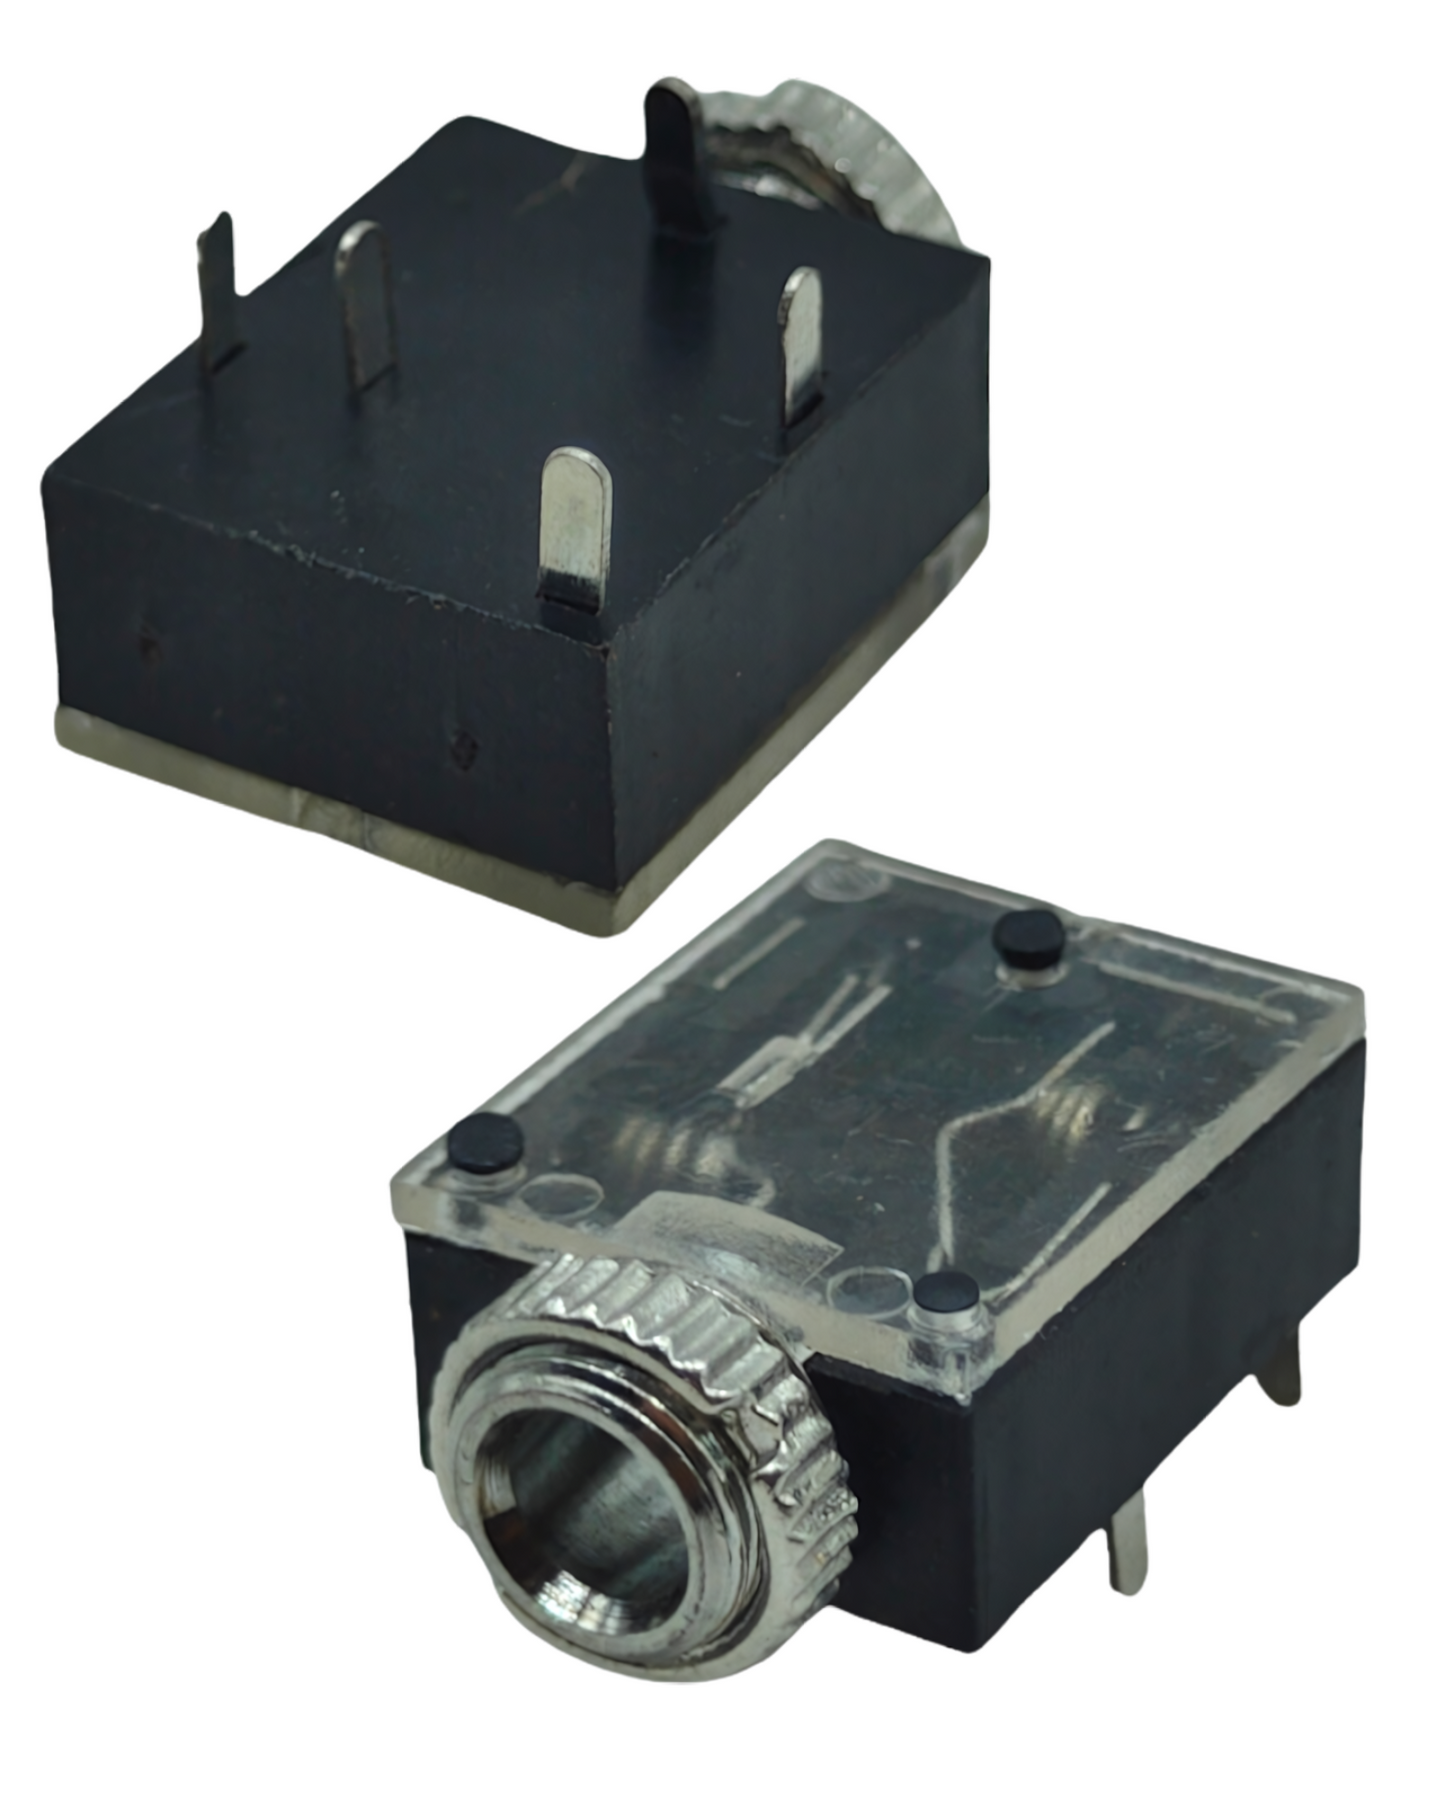 Jack 3.5mm Auxiliar para Impreso Diferentes Modelos